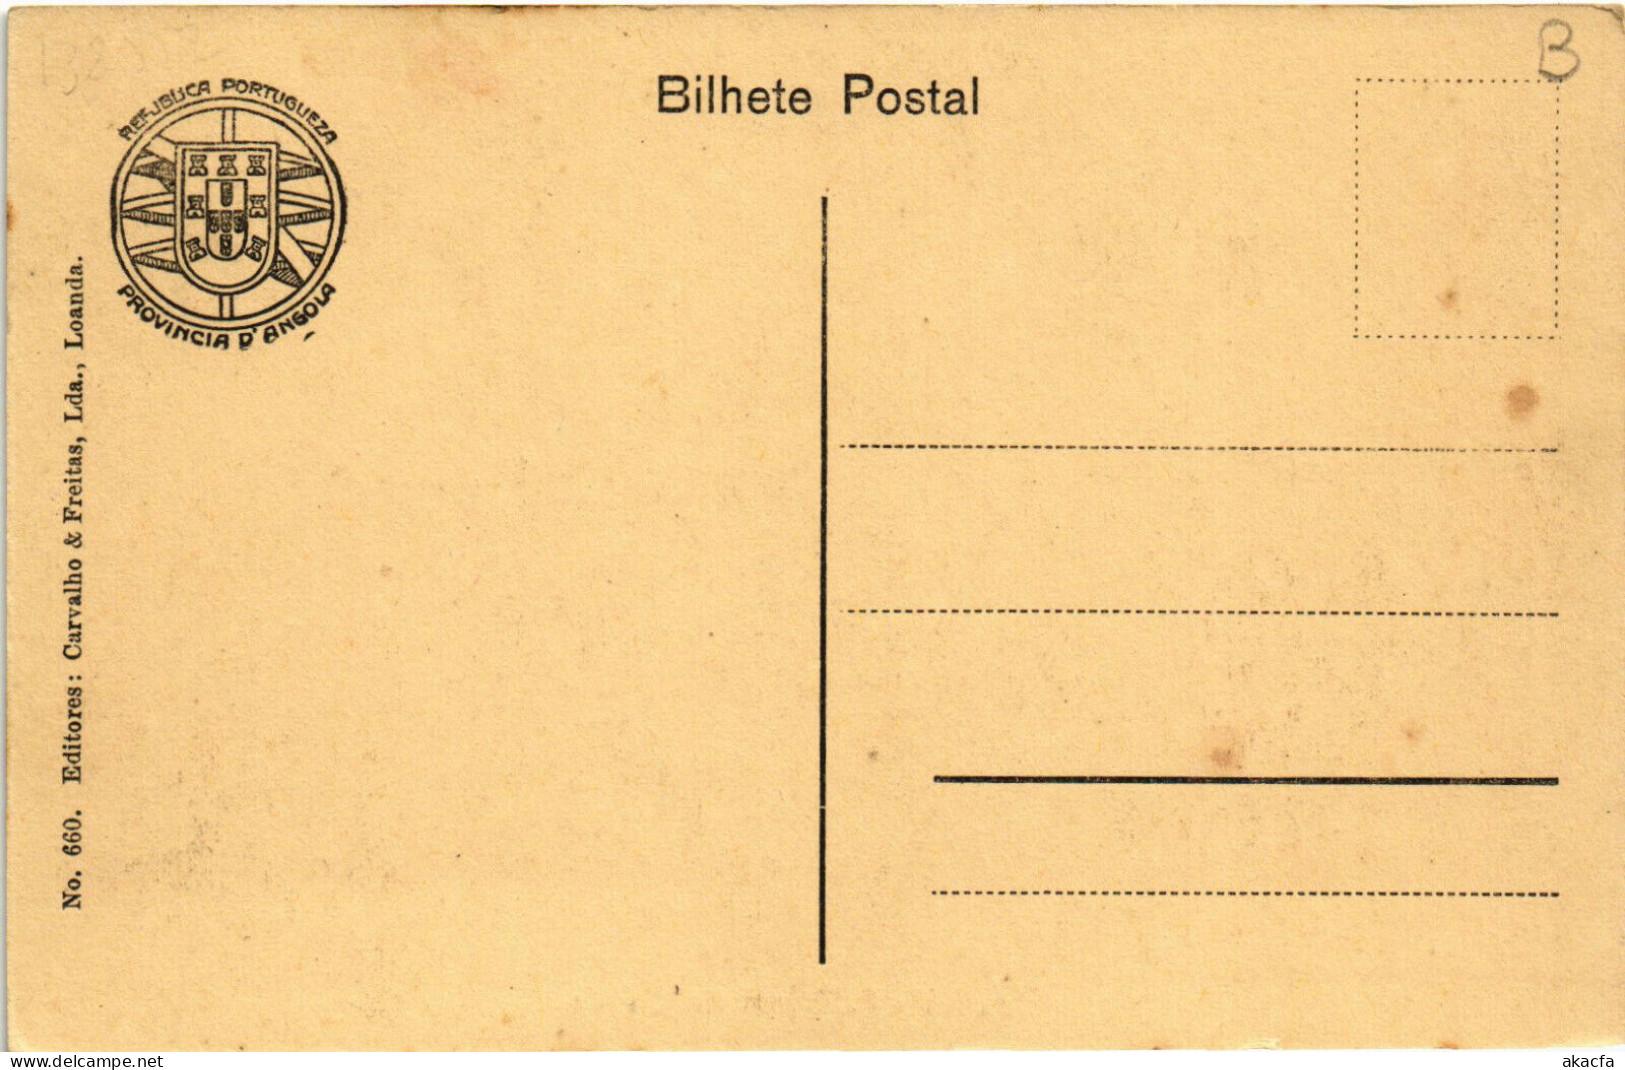 PC CPA ANGOLA / PORTUGAL, LOANDA, PAISAGEM DO DANDE, Vintage Postcard (b21633) - Angola